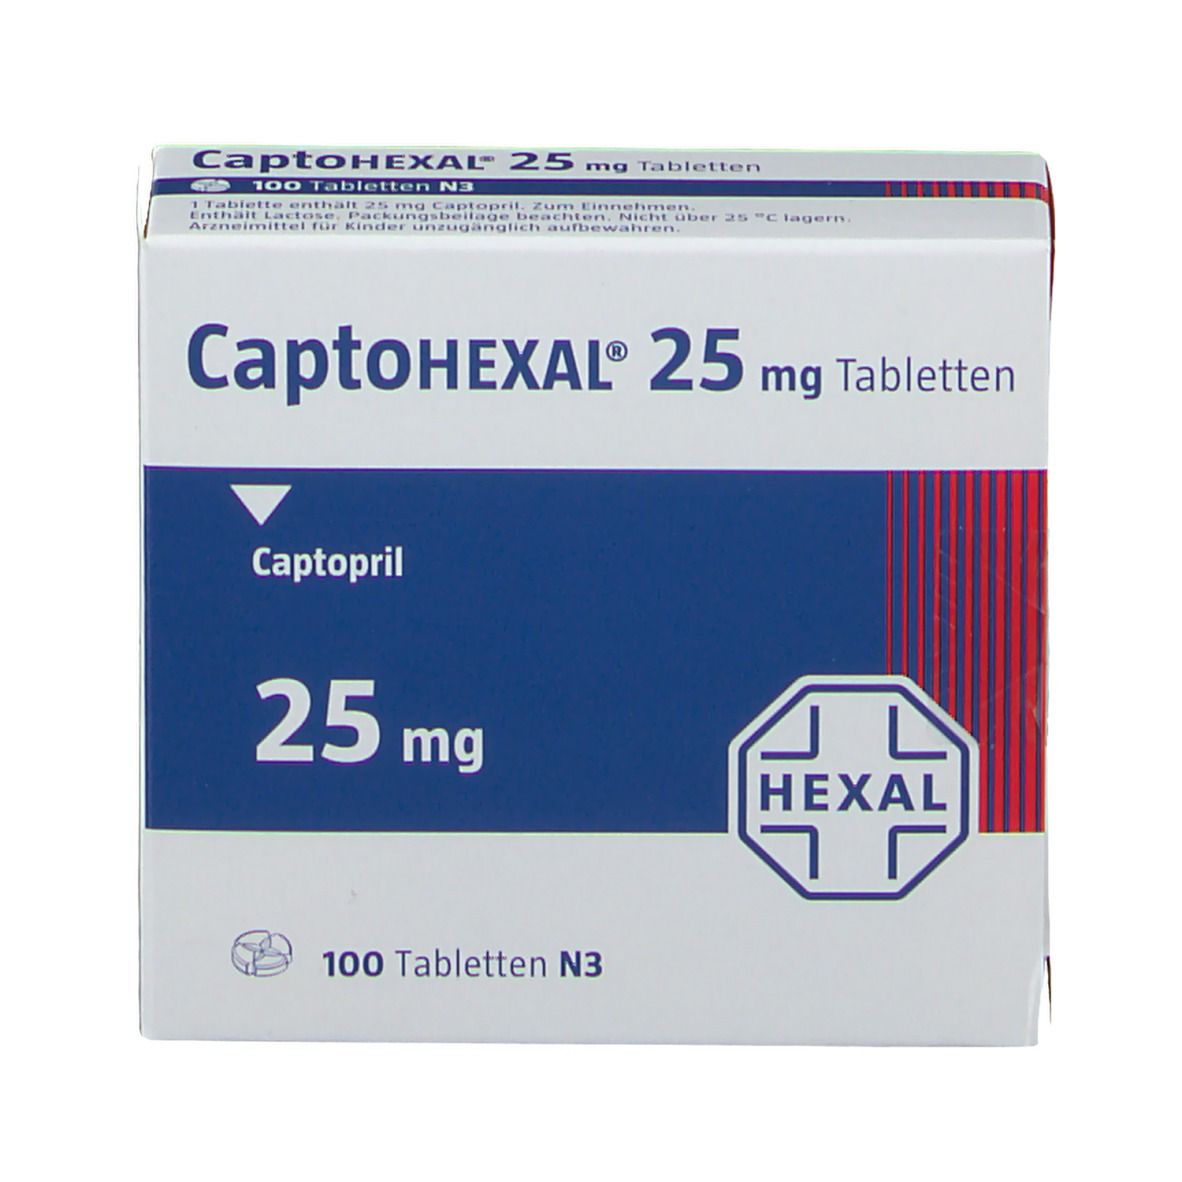 CaptoHEXAL® 25